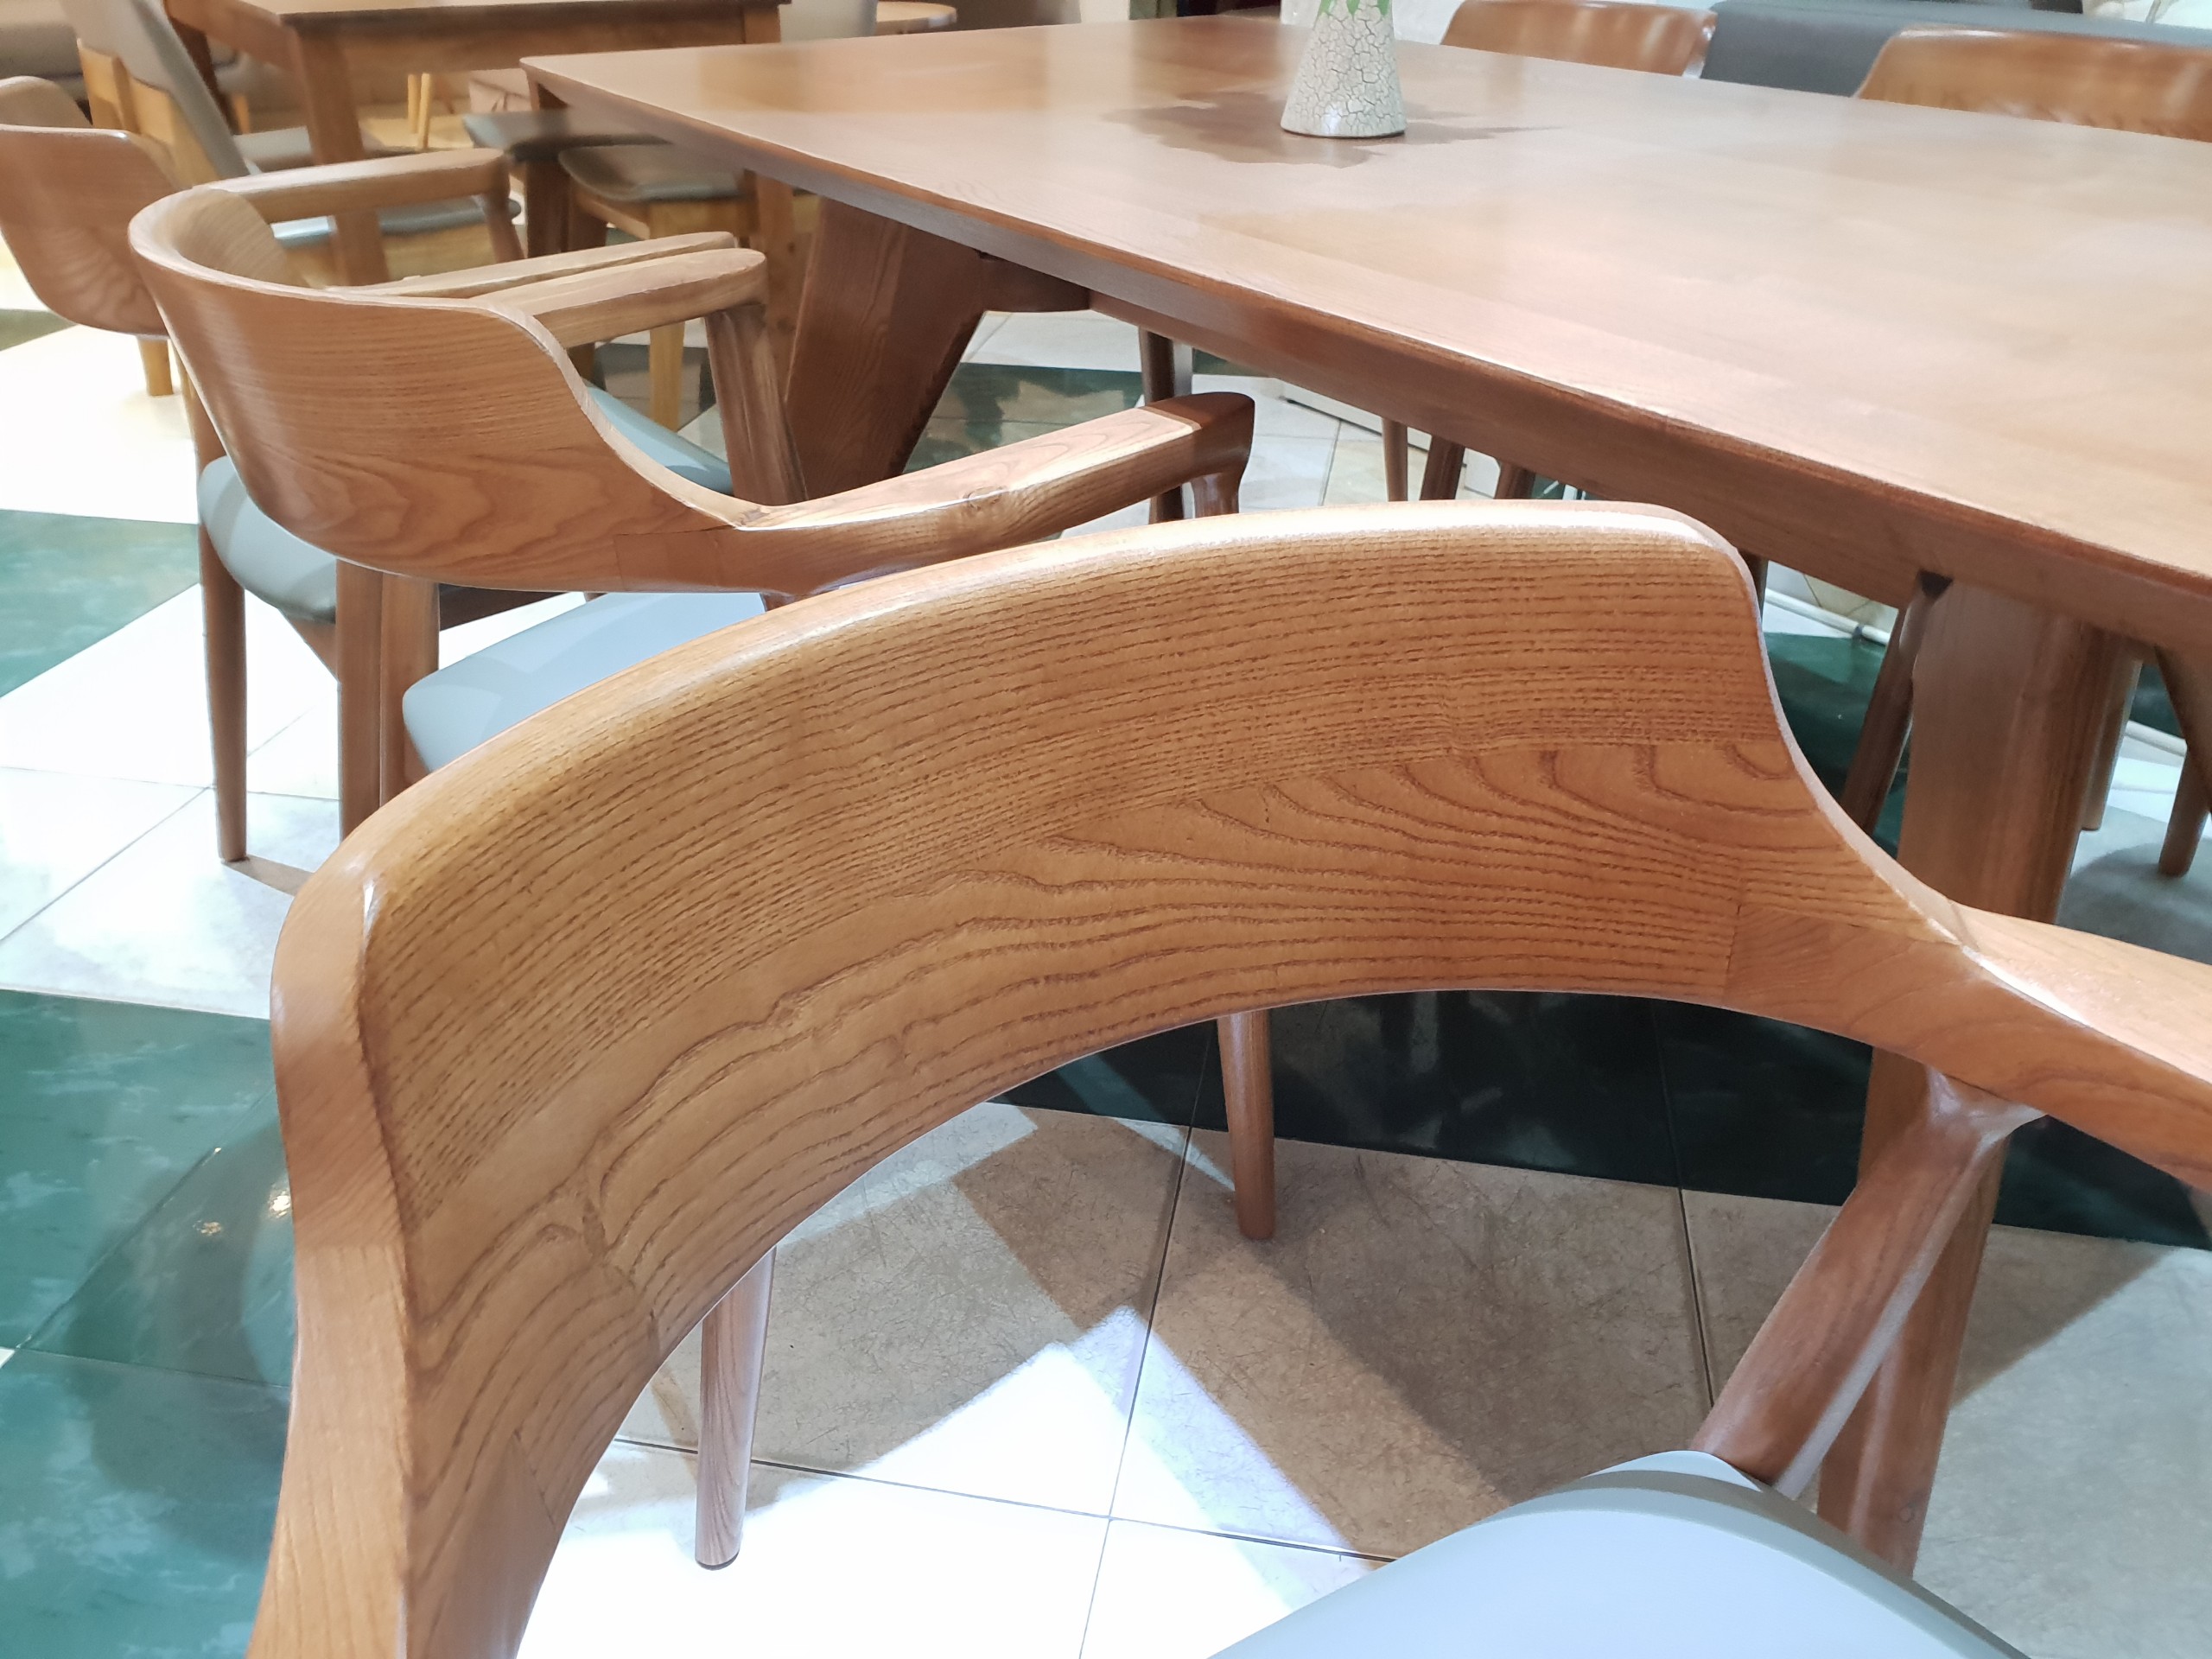 Bộ ghế ăn gỗ sồi tự nhiên (Nâu)